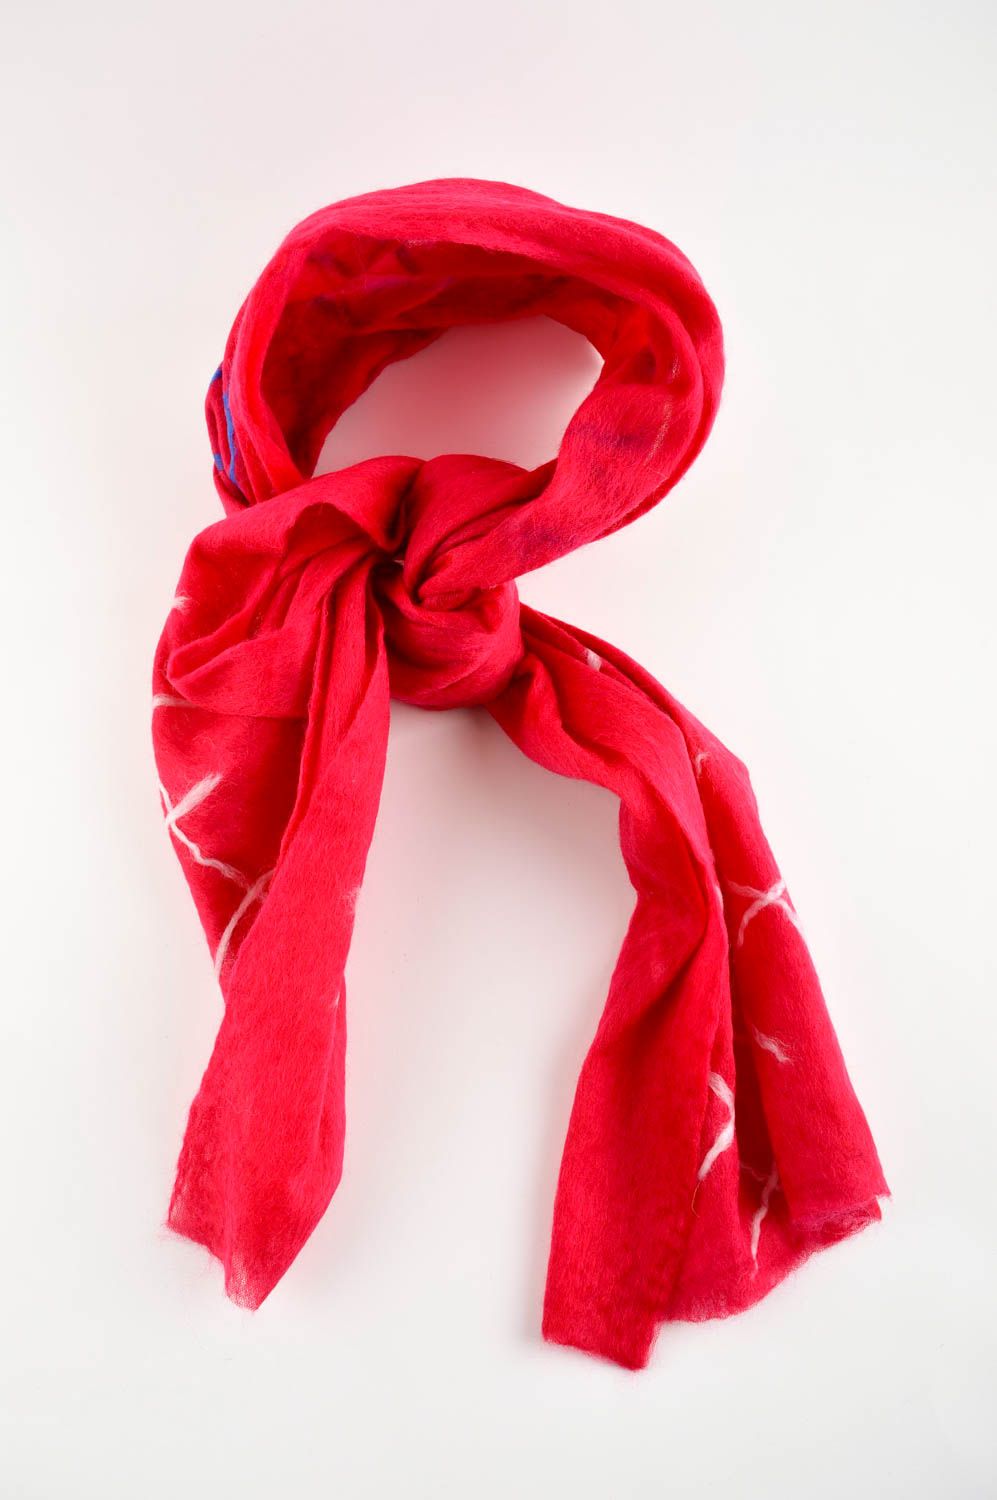 Handmade gefilzter Schal Frauen Accessoire roter Schal aus Wolle gemustert grell foto 2